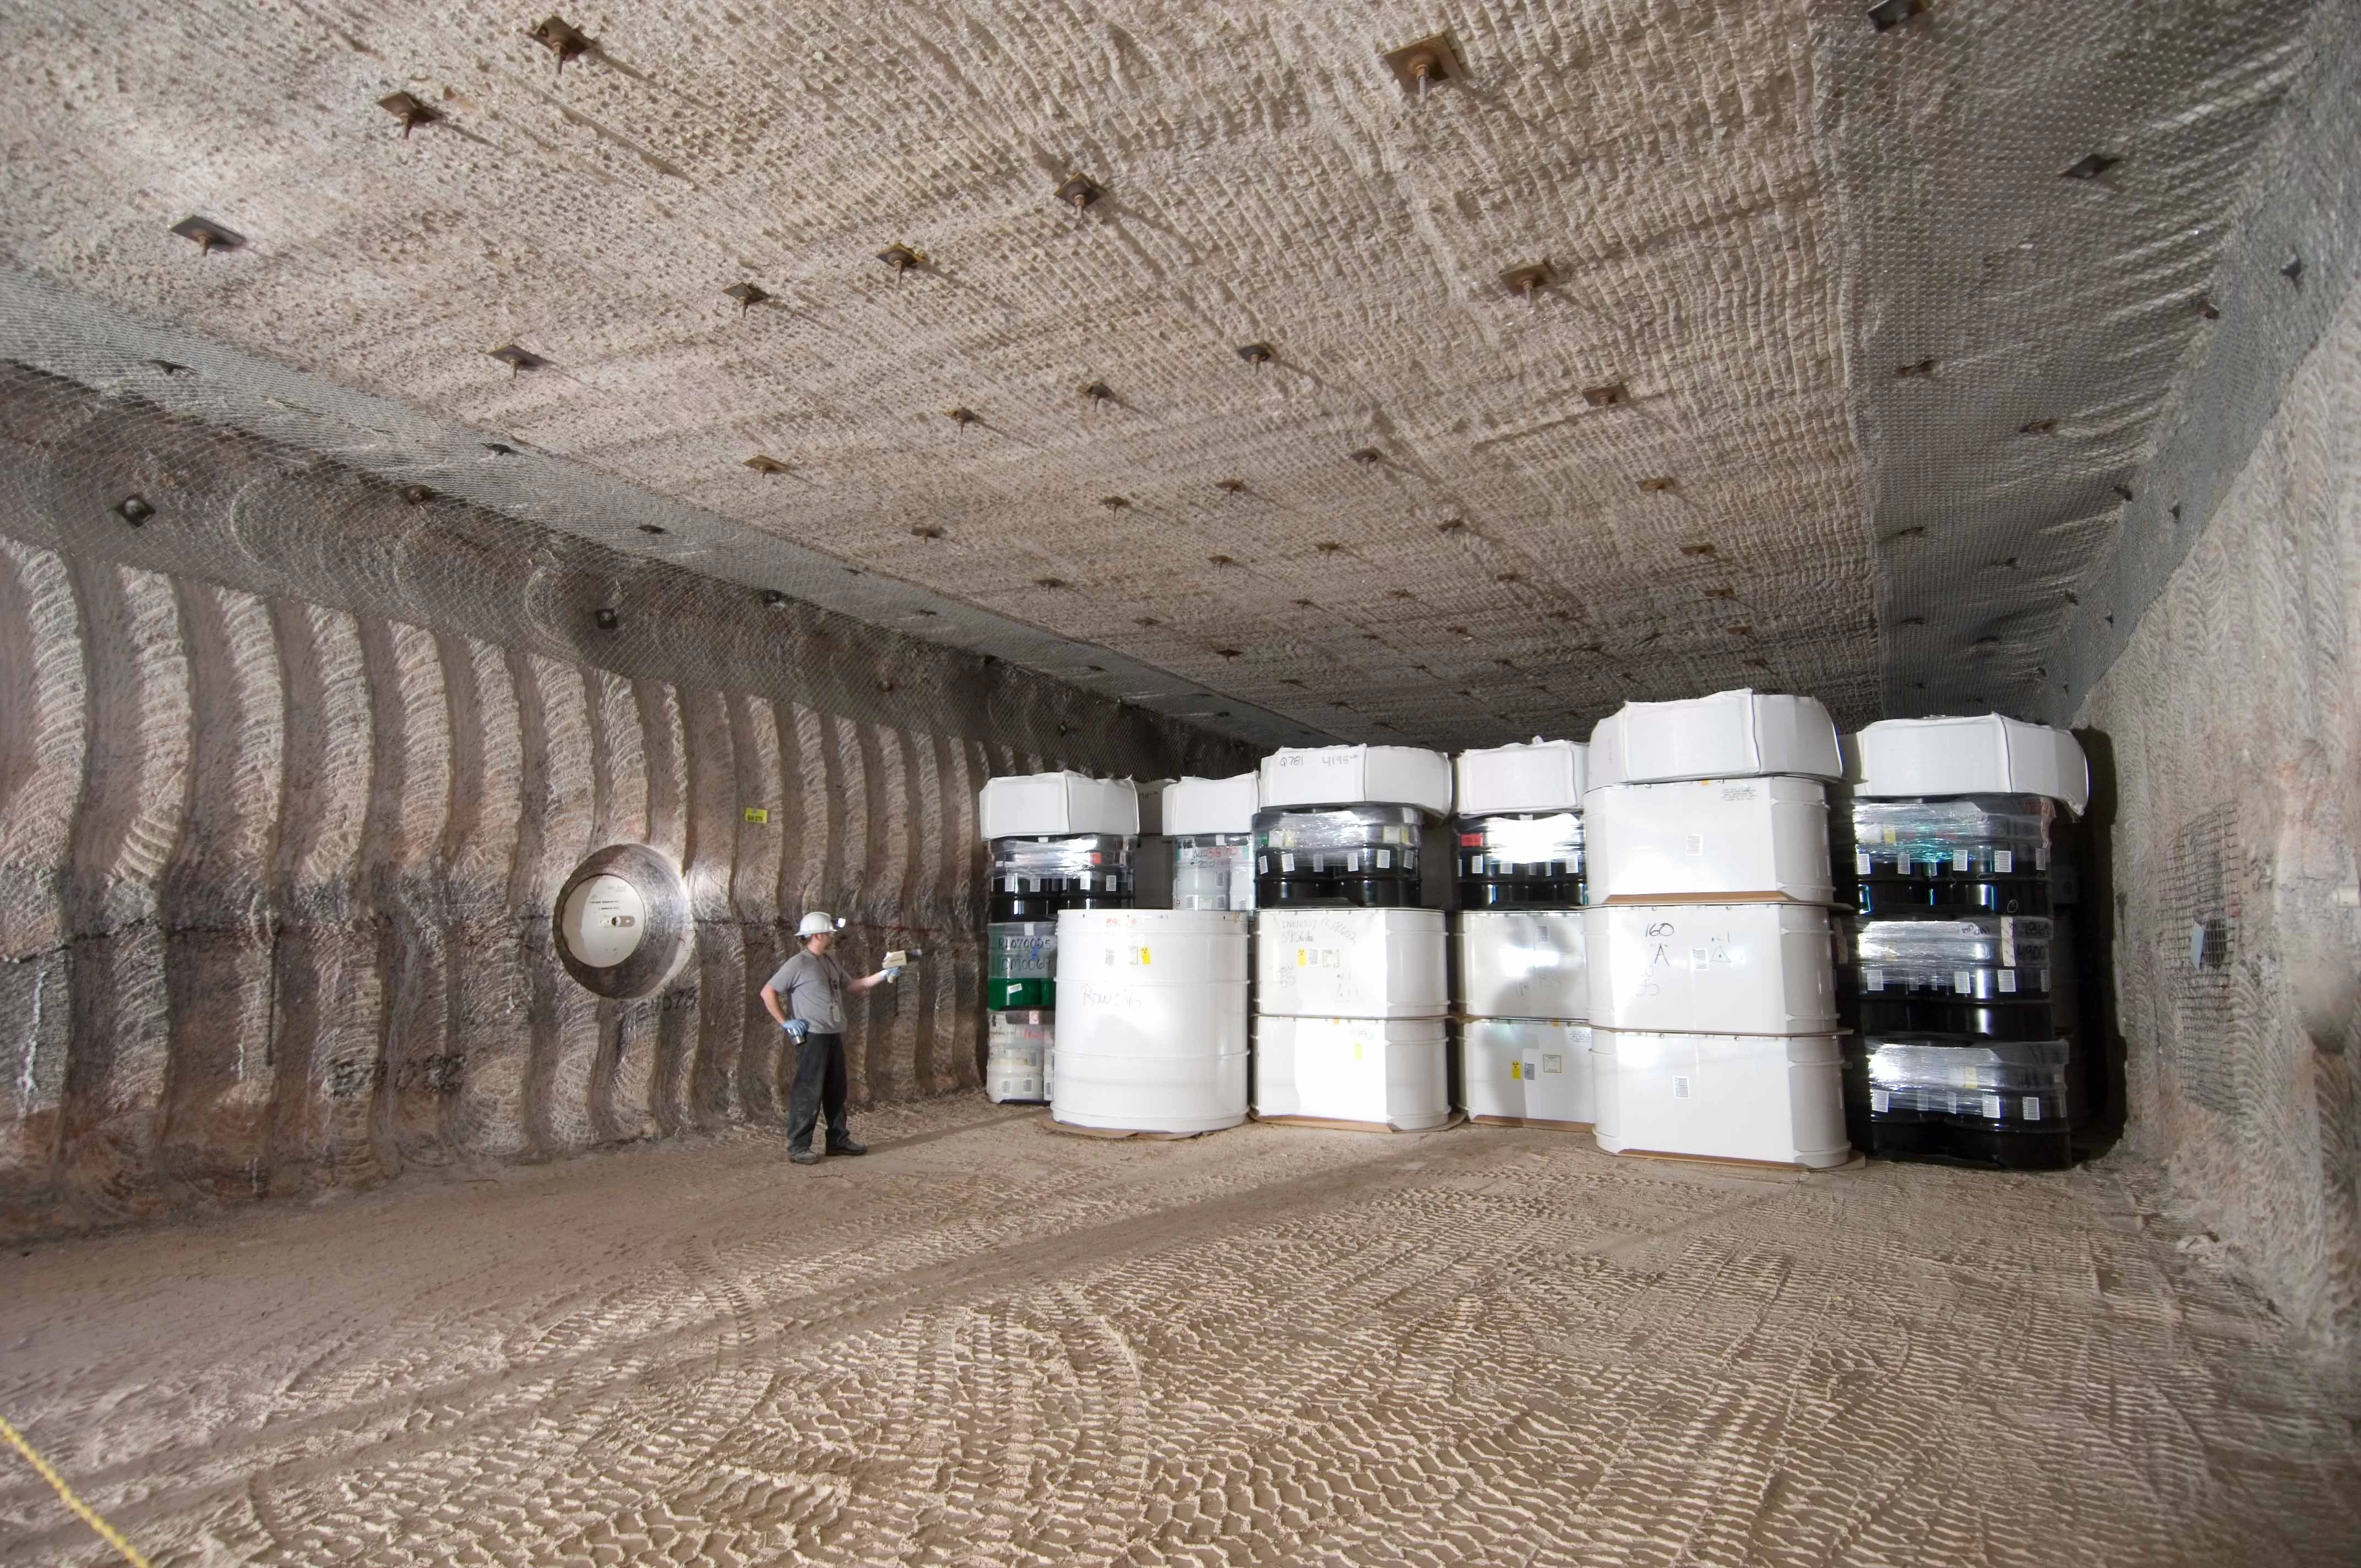 View of one of the WIPP underground storage halls. Photo: WIPP